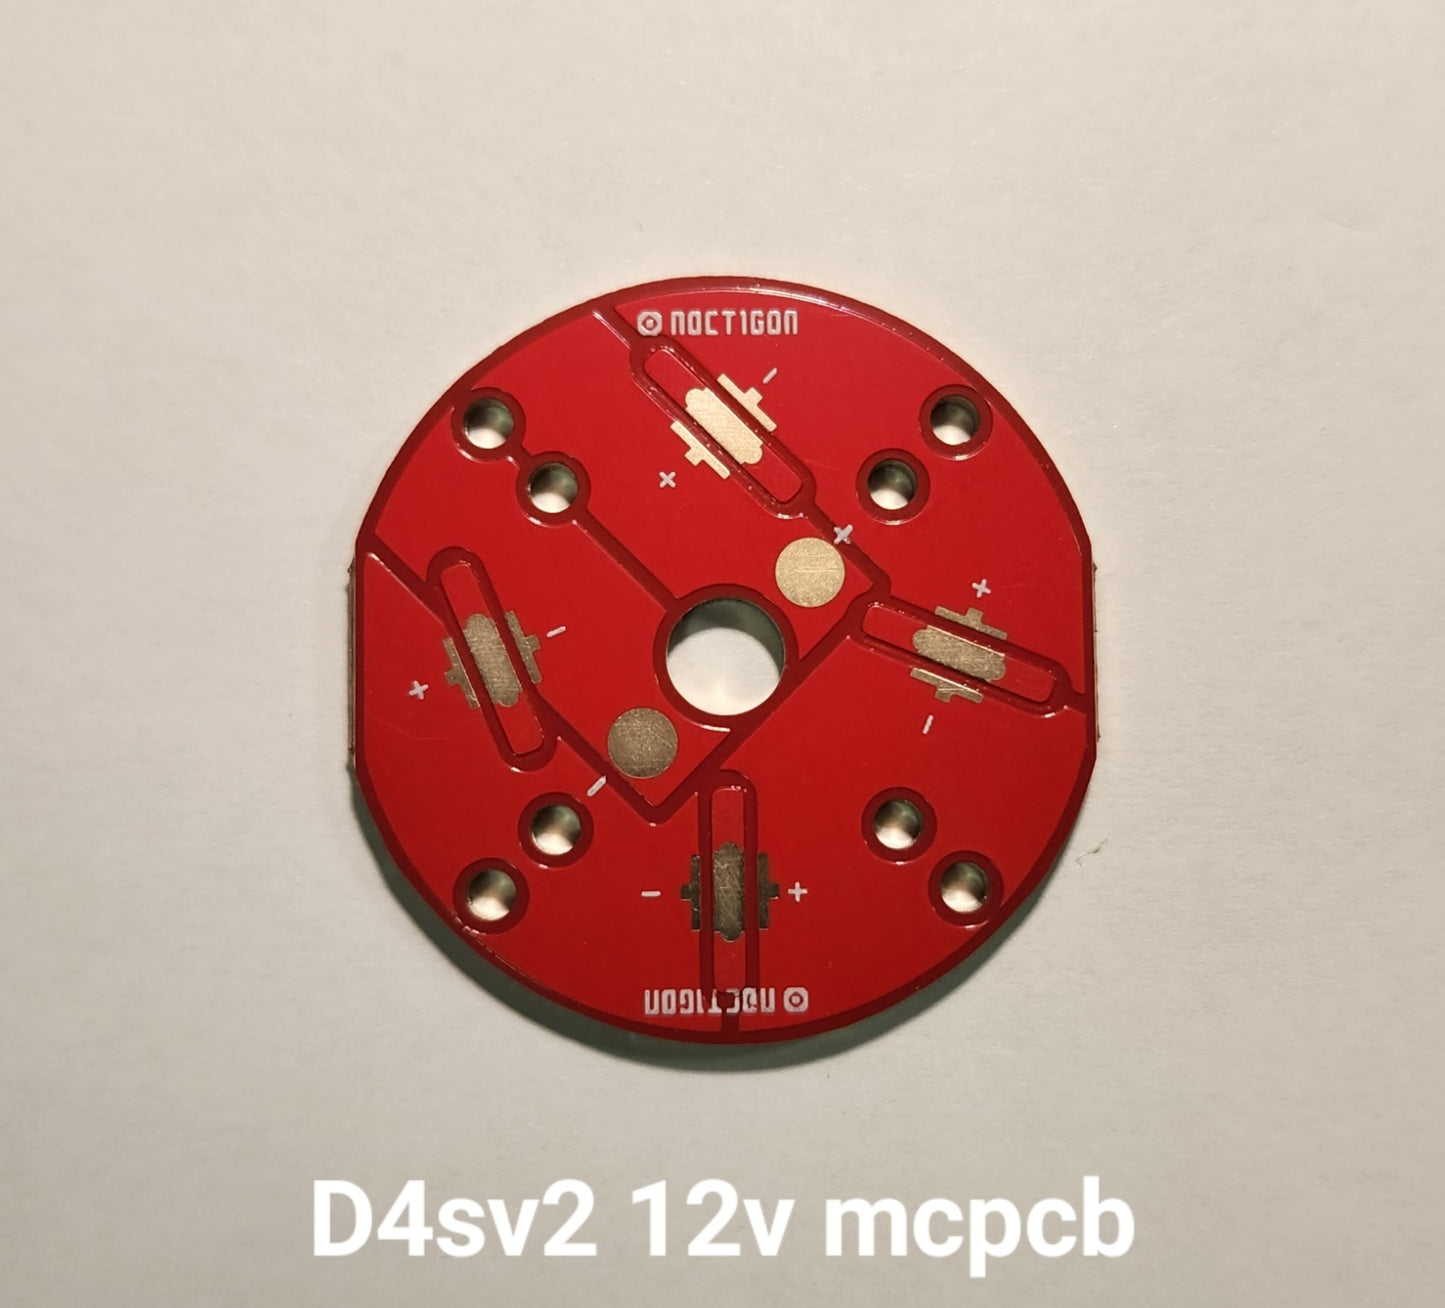 Emisar Noctigon XP Raw MCPCB Custom D4SV2 12V QUAD MCPCB (BOOST DRIVER)